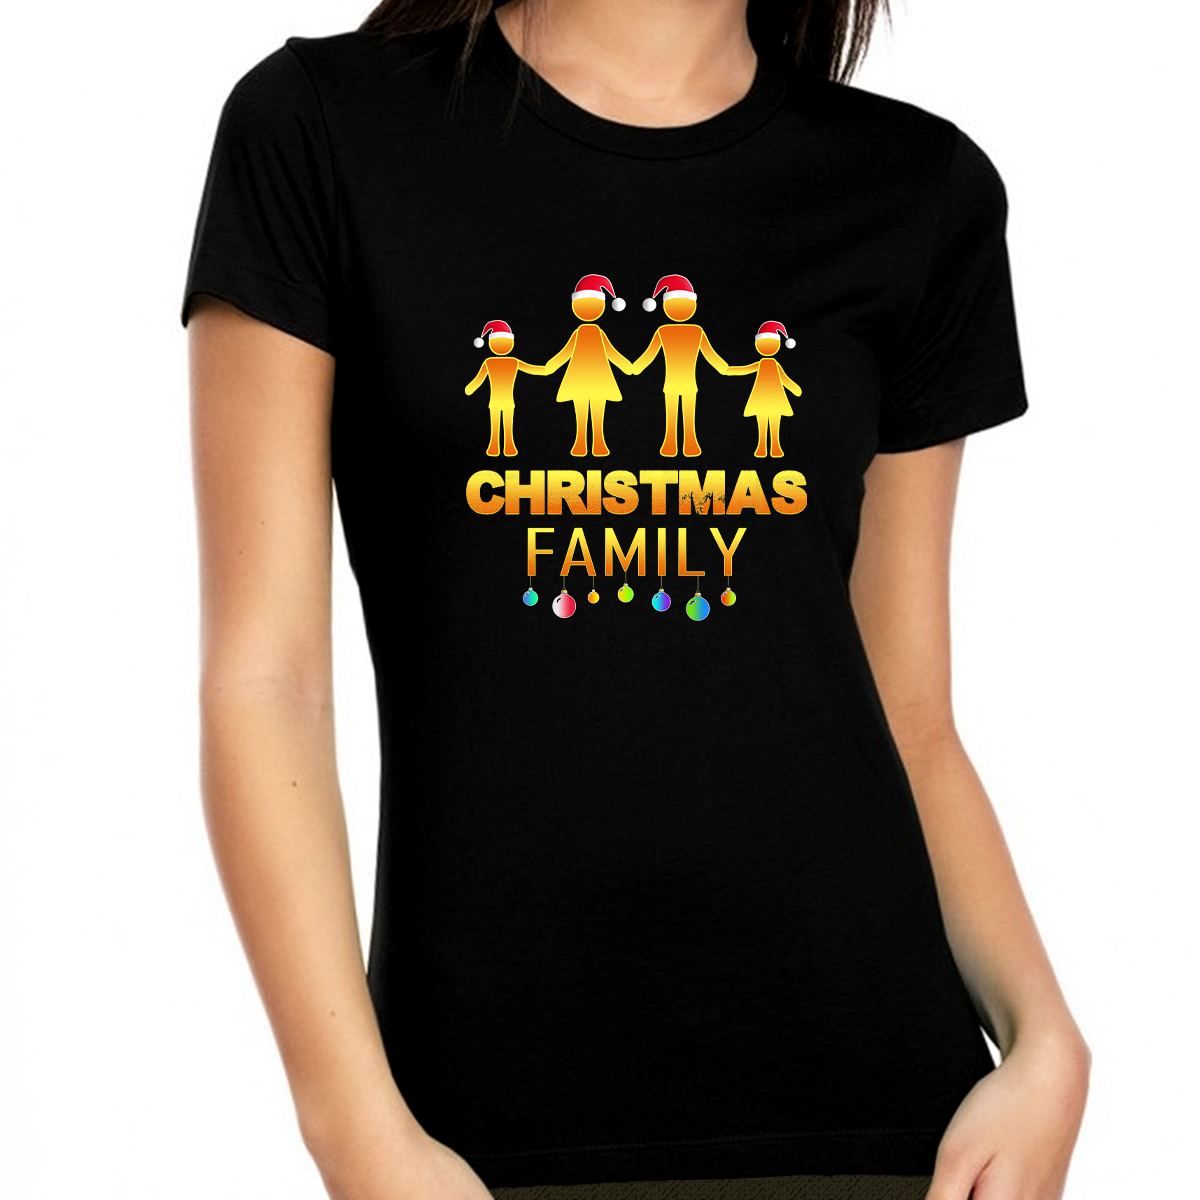 Cute Christmas Shirts for Women Family Matching Christmas Shirts for Family Shirts Christmas Shirt